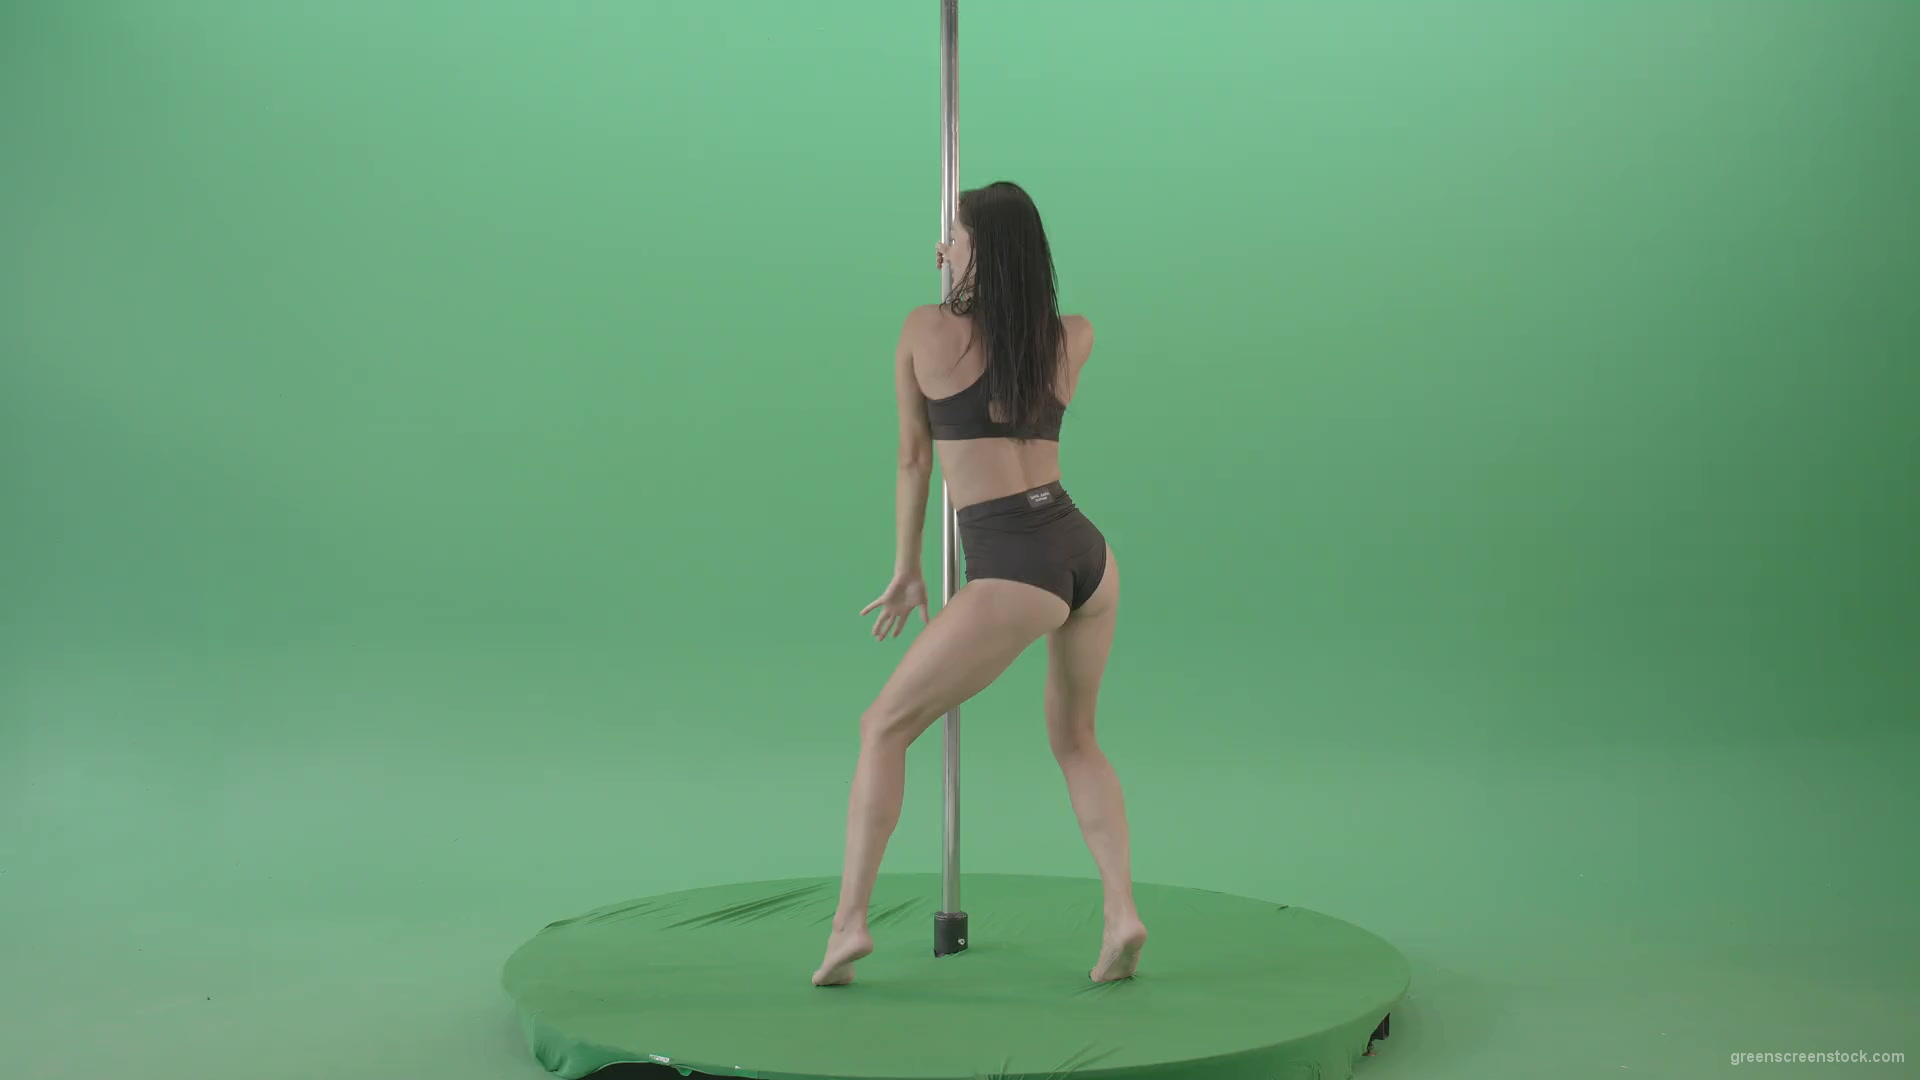 Brunette-Strip-Model-Girl-has-fun-on-dancing-pole-isolated-on-Green-Screen-4K-Video-Footage-1920_001 Green Screen Stock